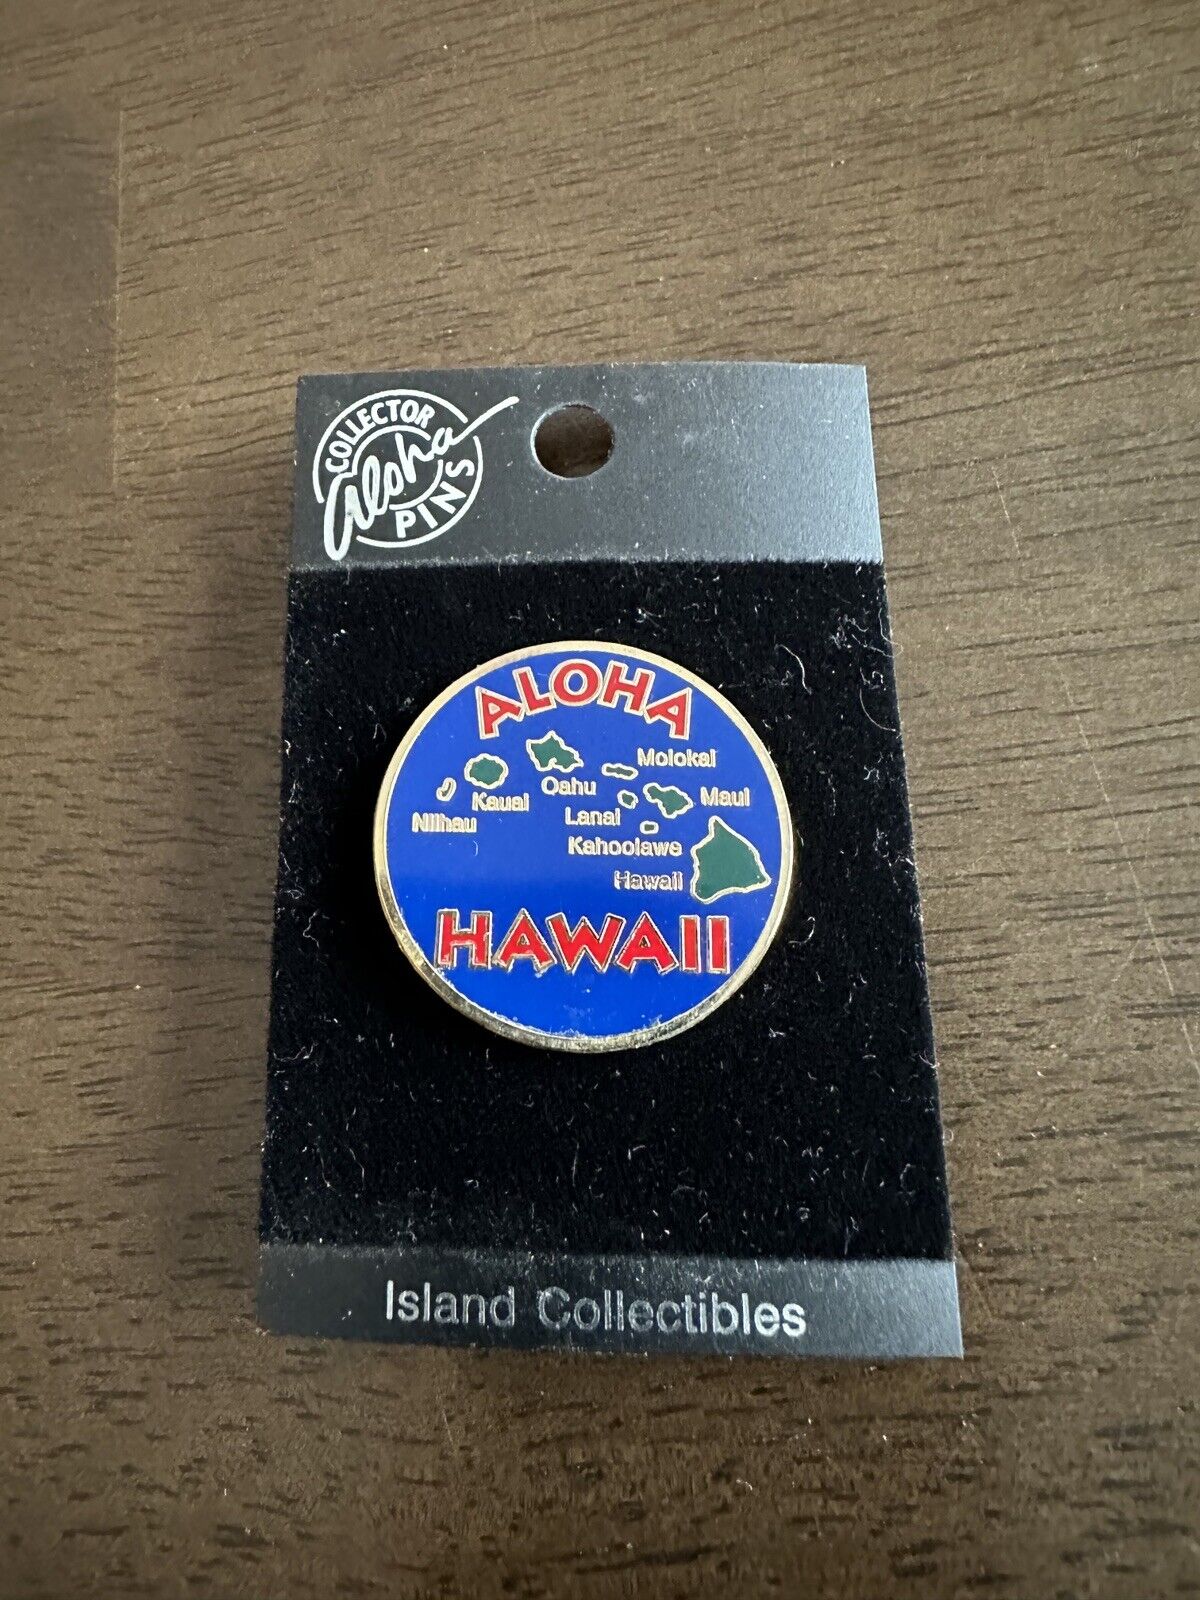 NEW ALOHA HAWAII Colorful Hawaiian Travel Souvenir PIN w/ labeled Islands